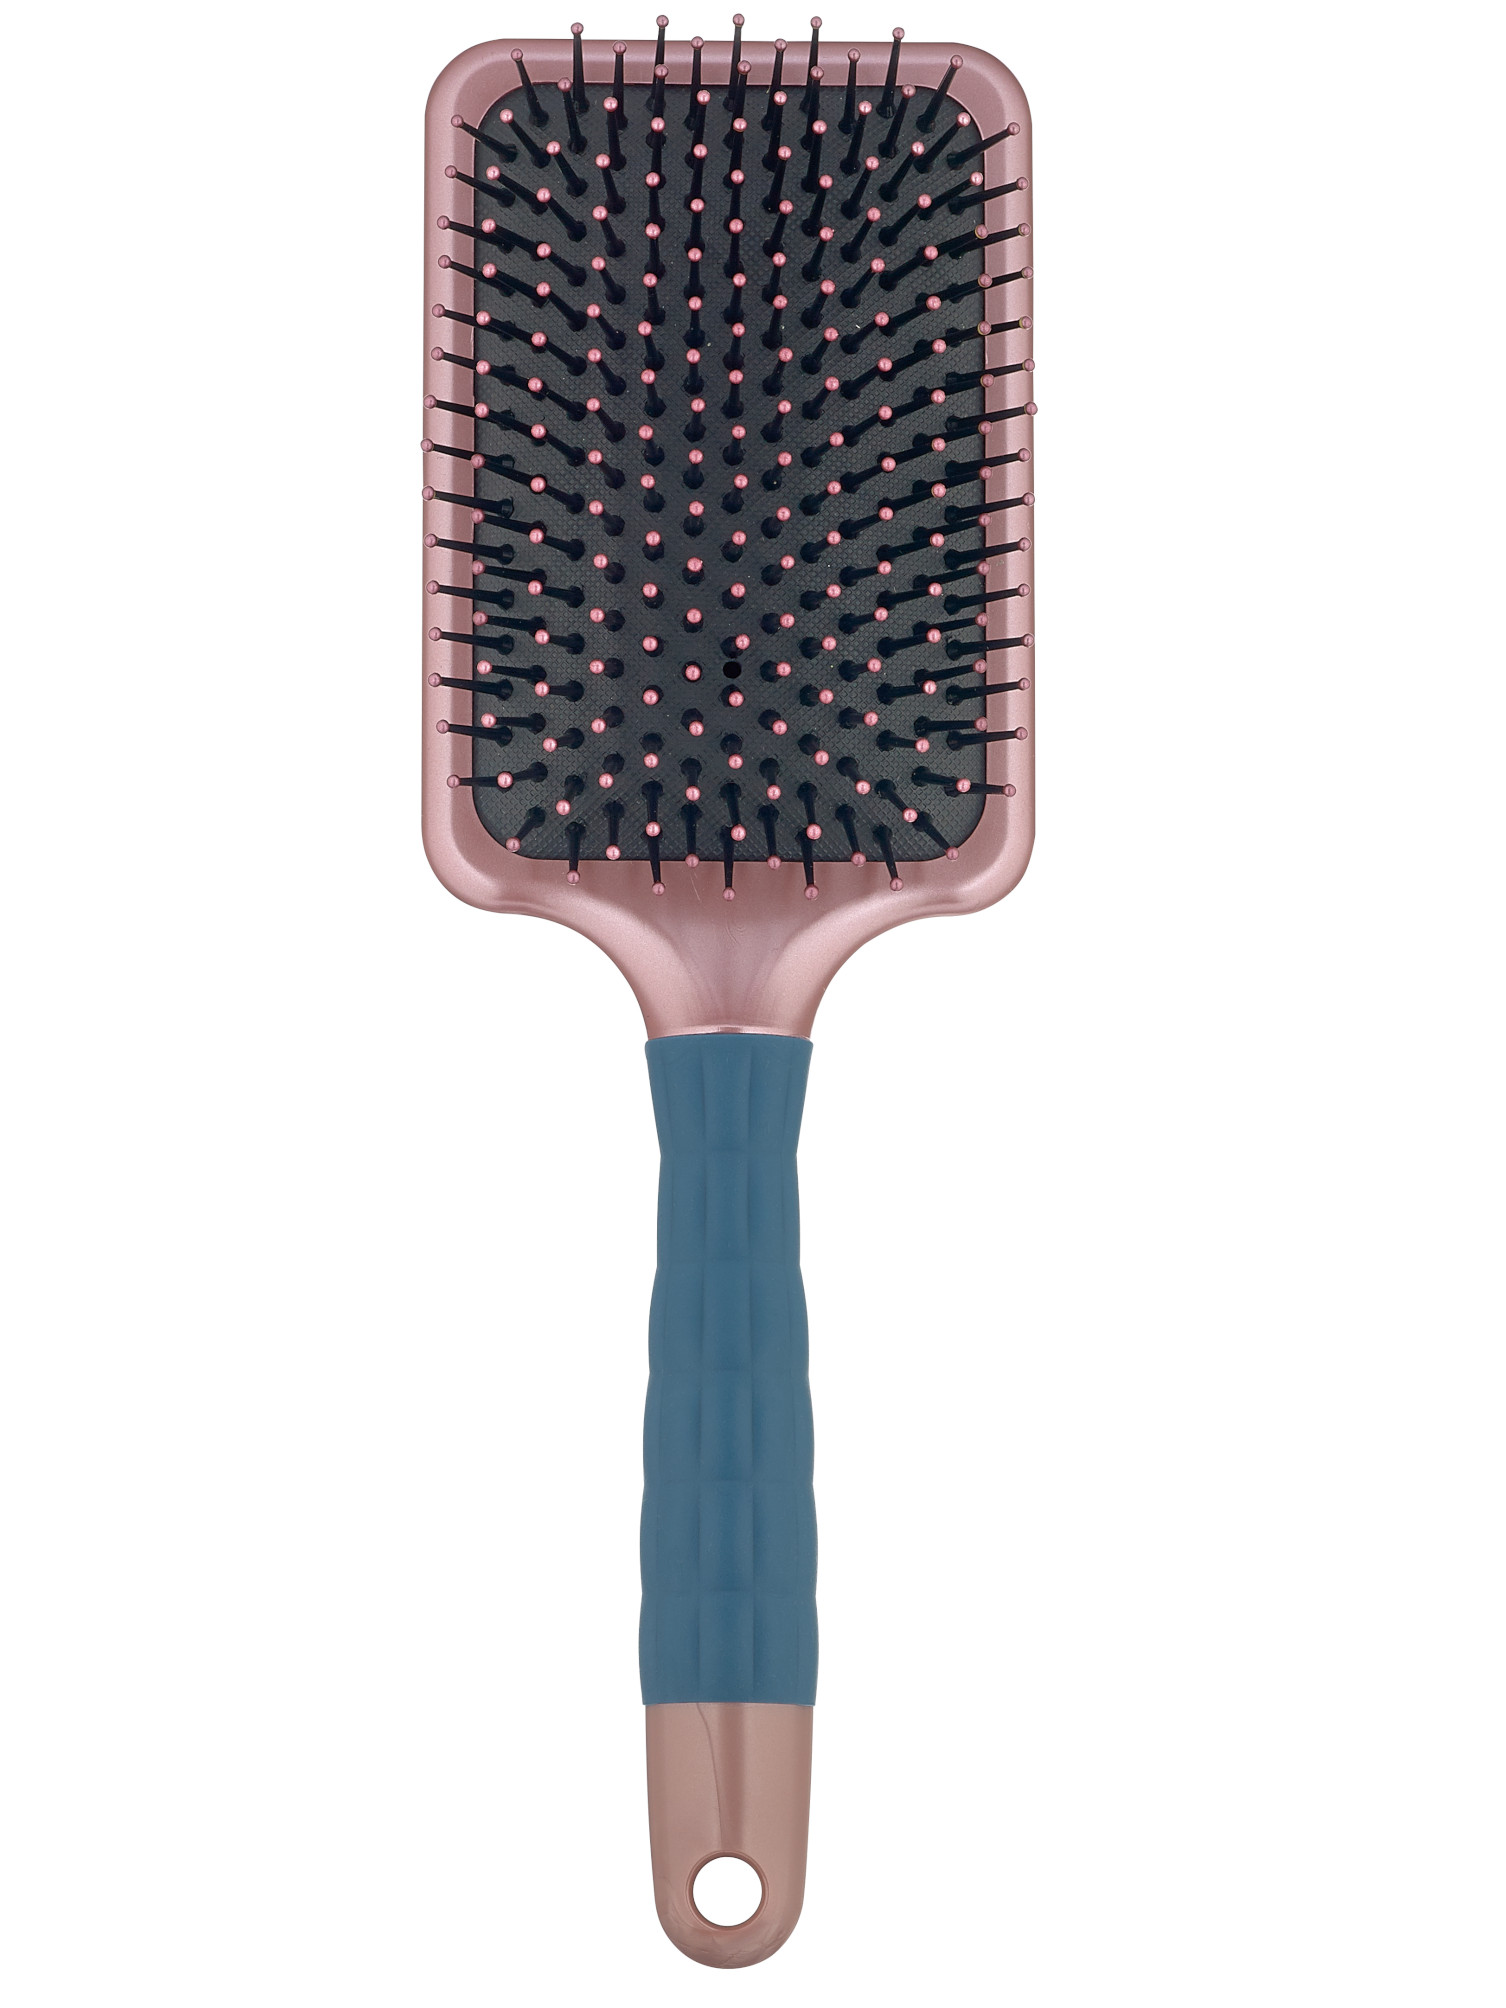 Plochý kartáč na vlasy s nylonovými štětinami Sibel Azurose - 27 x 8 cm (660059701) + DÁREK ZDARMA